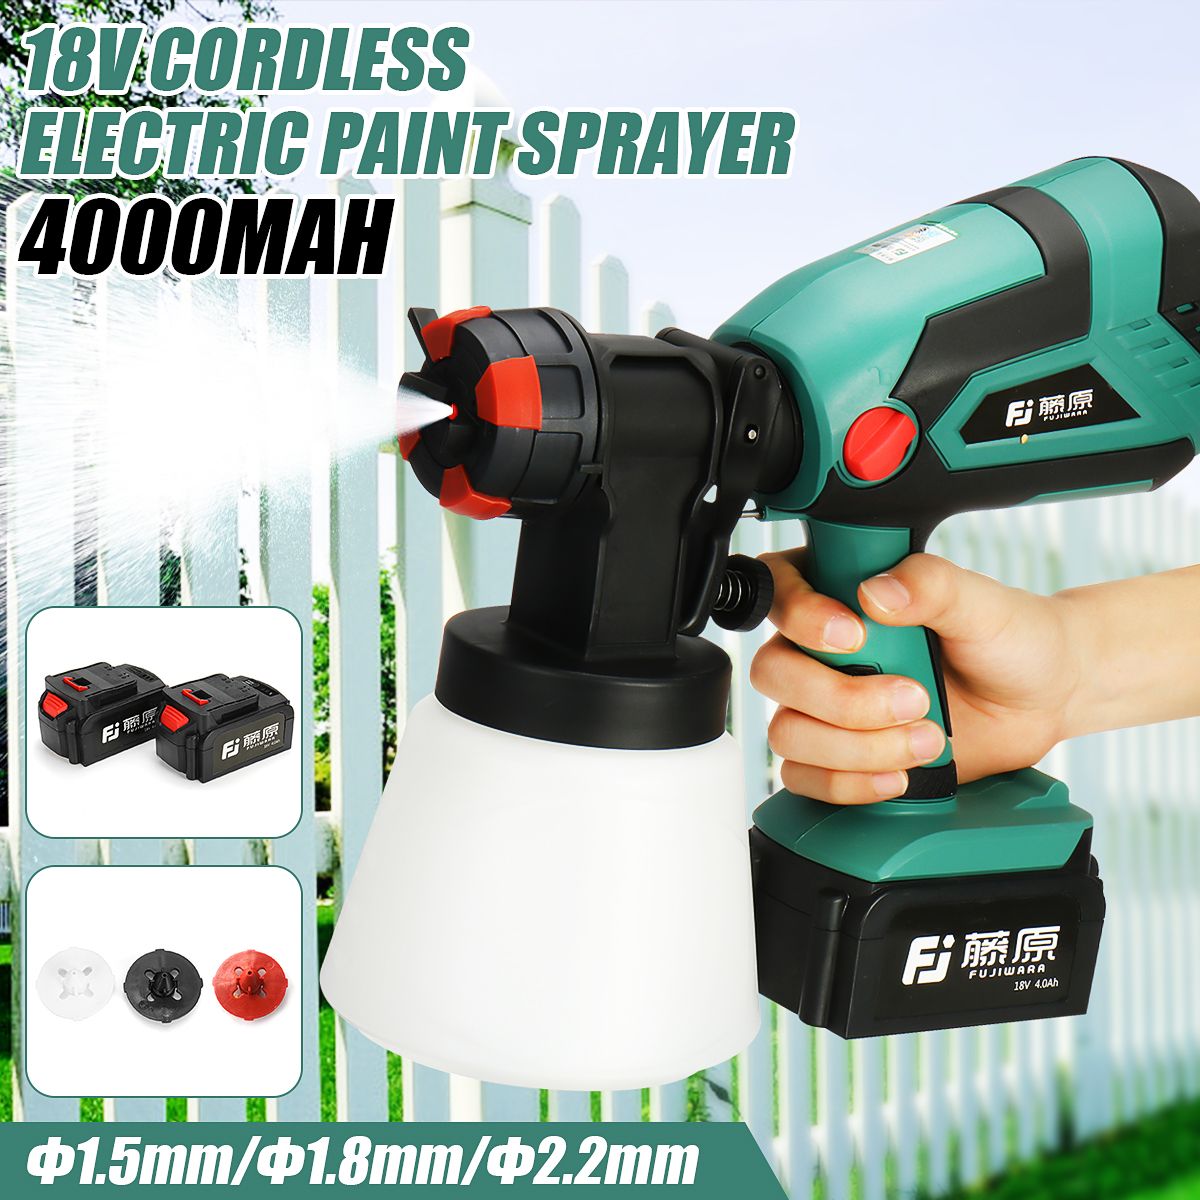 4000mAh-1000ML-18V-Cordless-Electric-Paint-Sprayer-Air-Spray-Painter-1681955